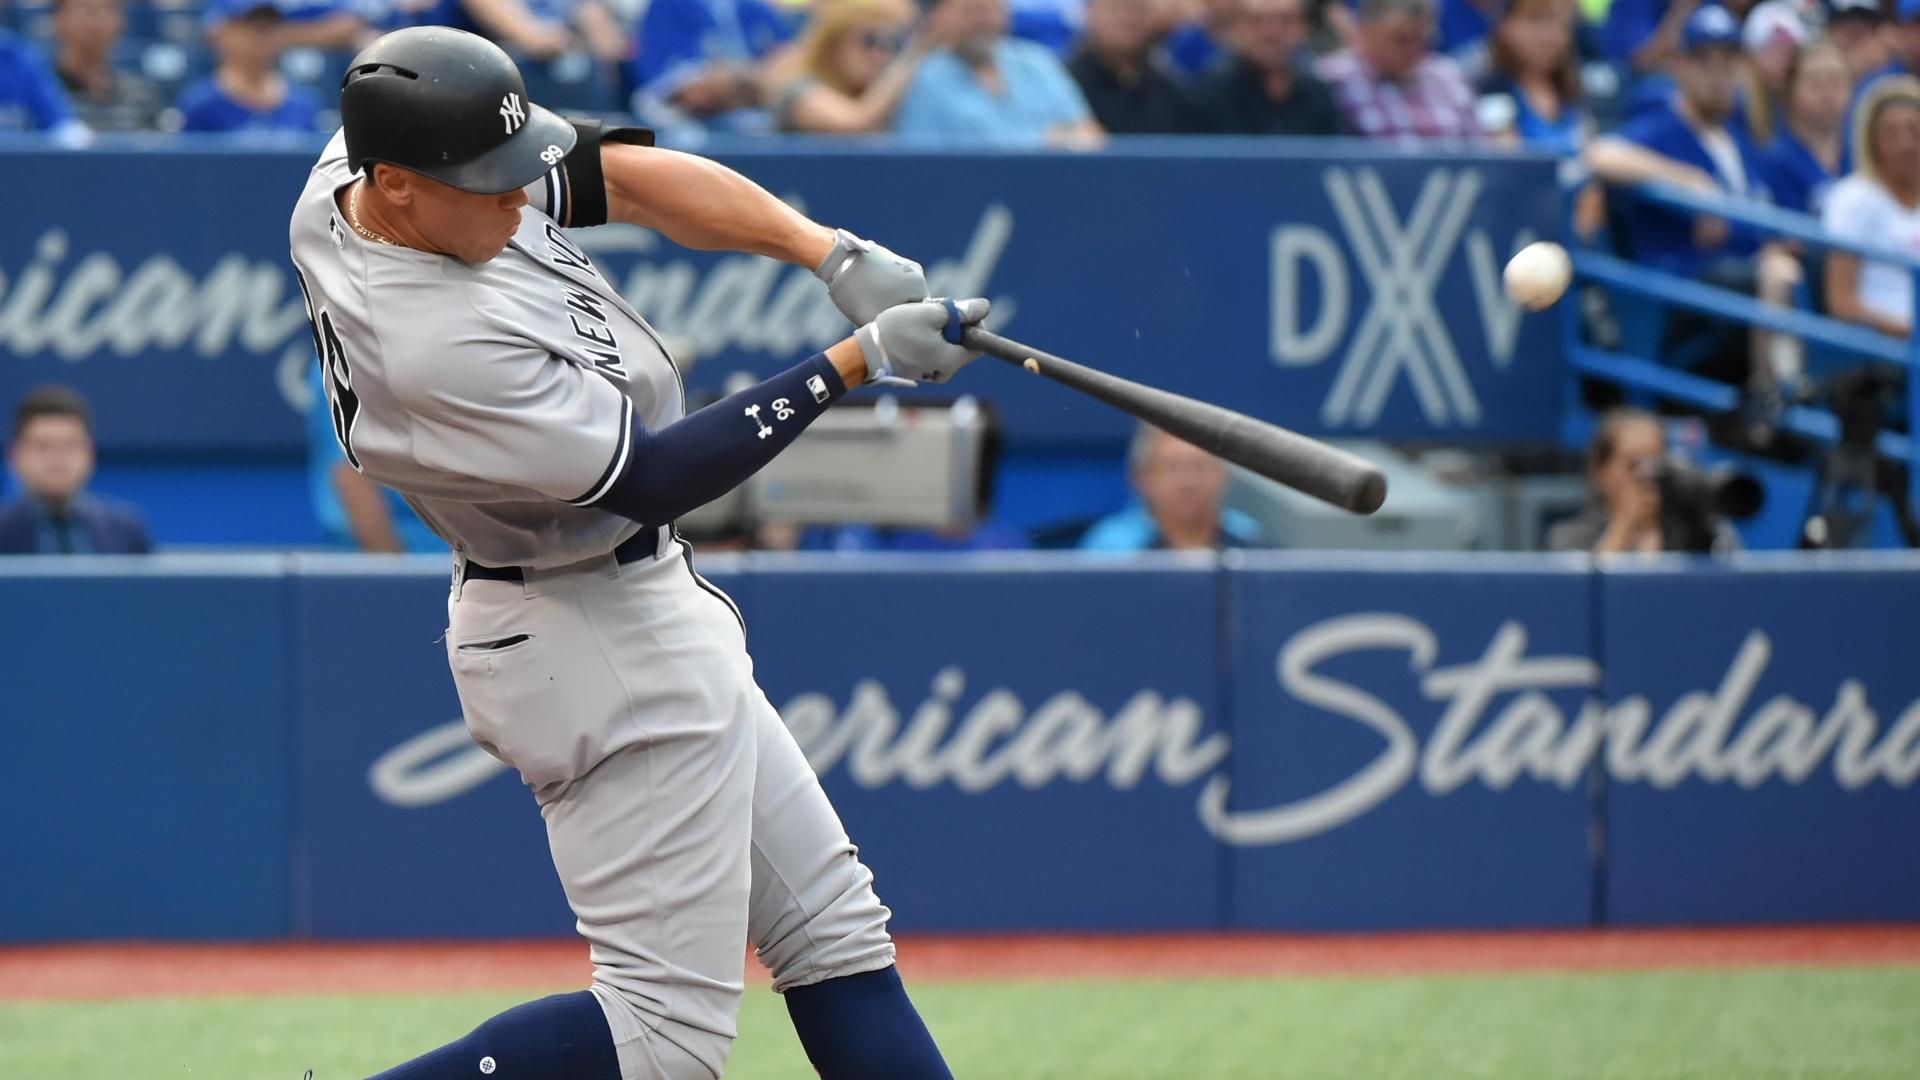 New York Yankees star Aaron Judge takes BP, fields on Wednesday